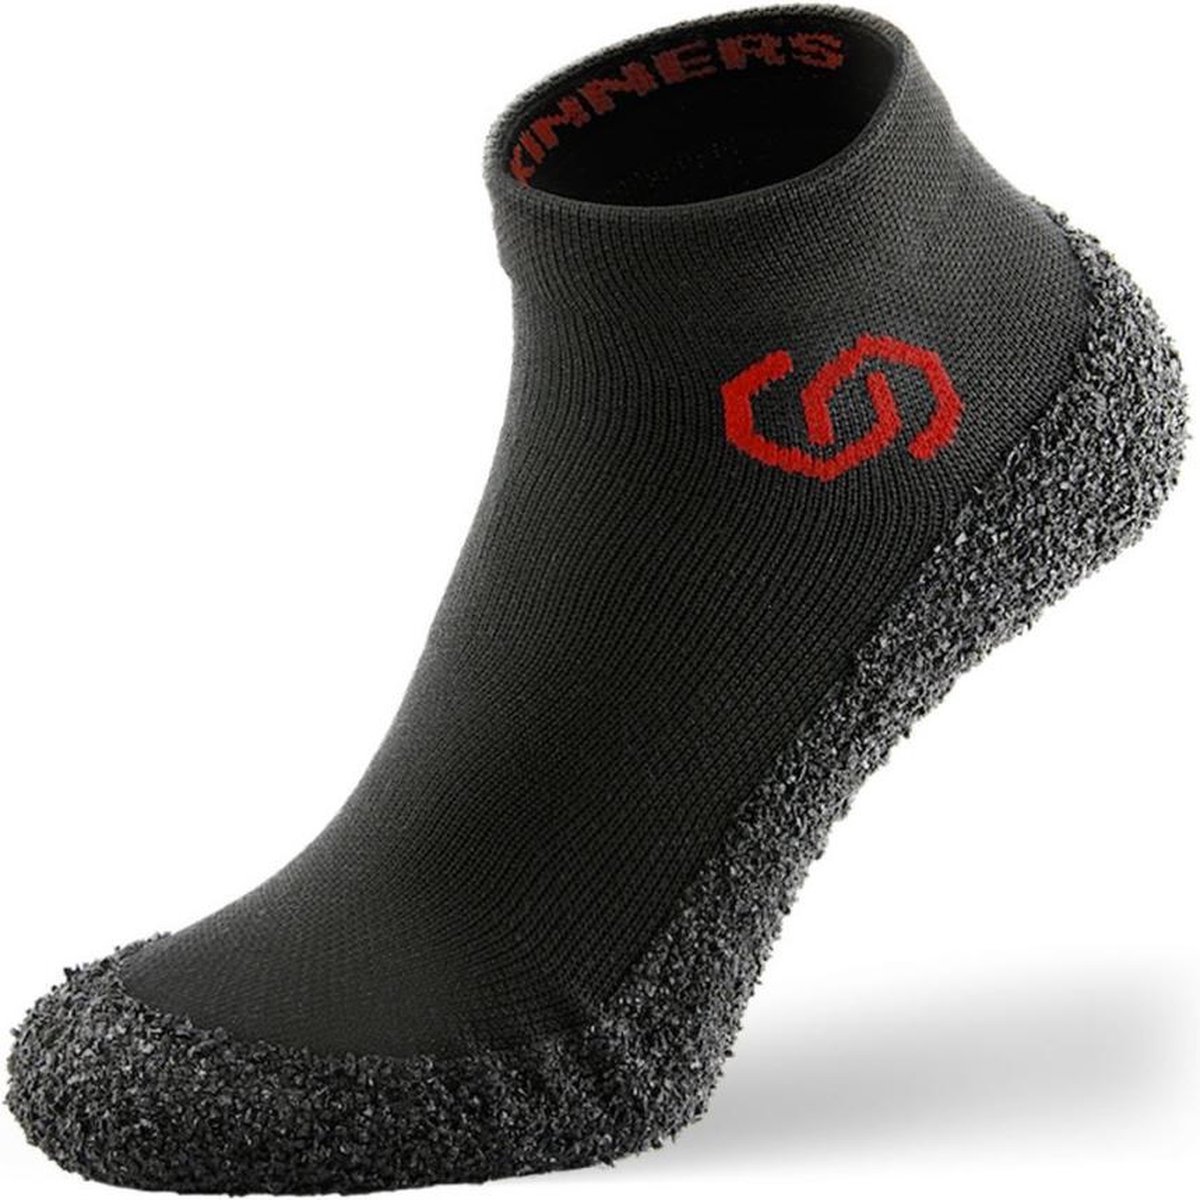 Skinners Barefoot sokschoenen - compact en lichtgewicht - Red - XS